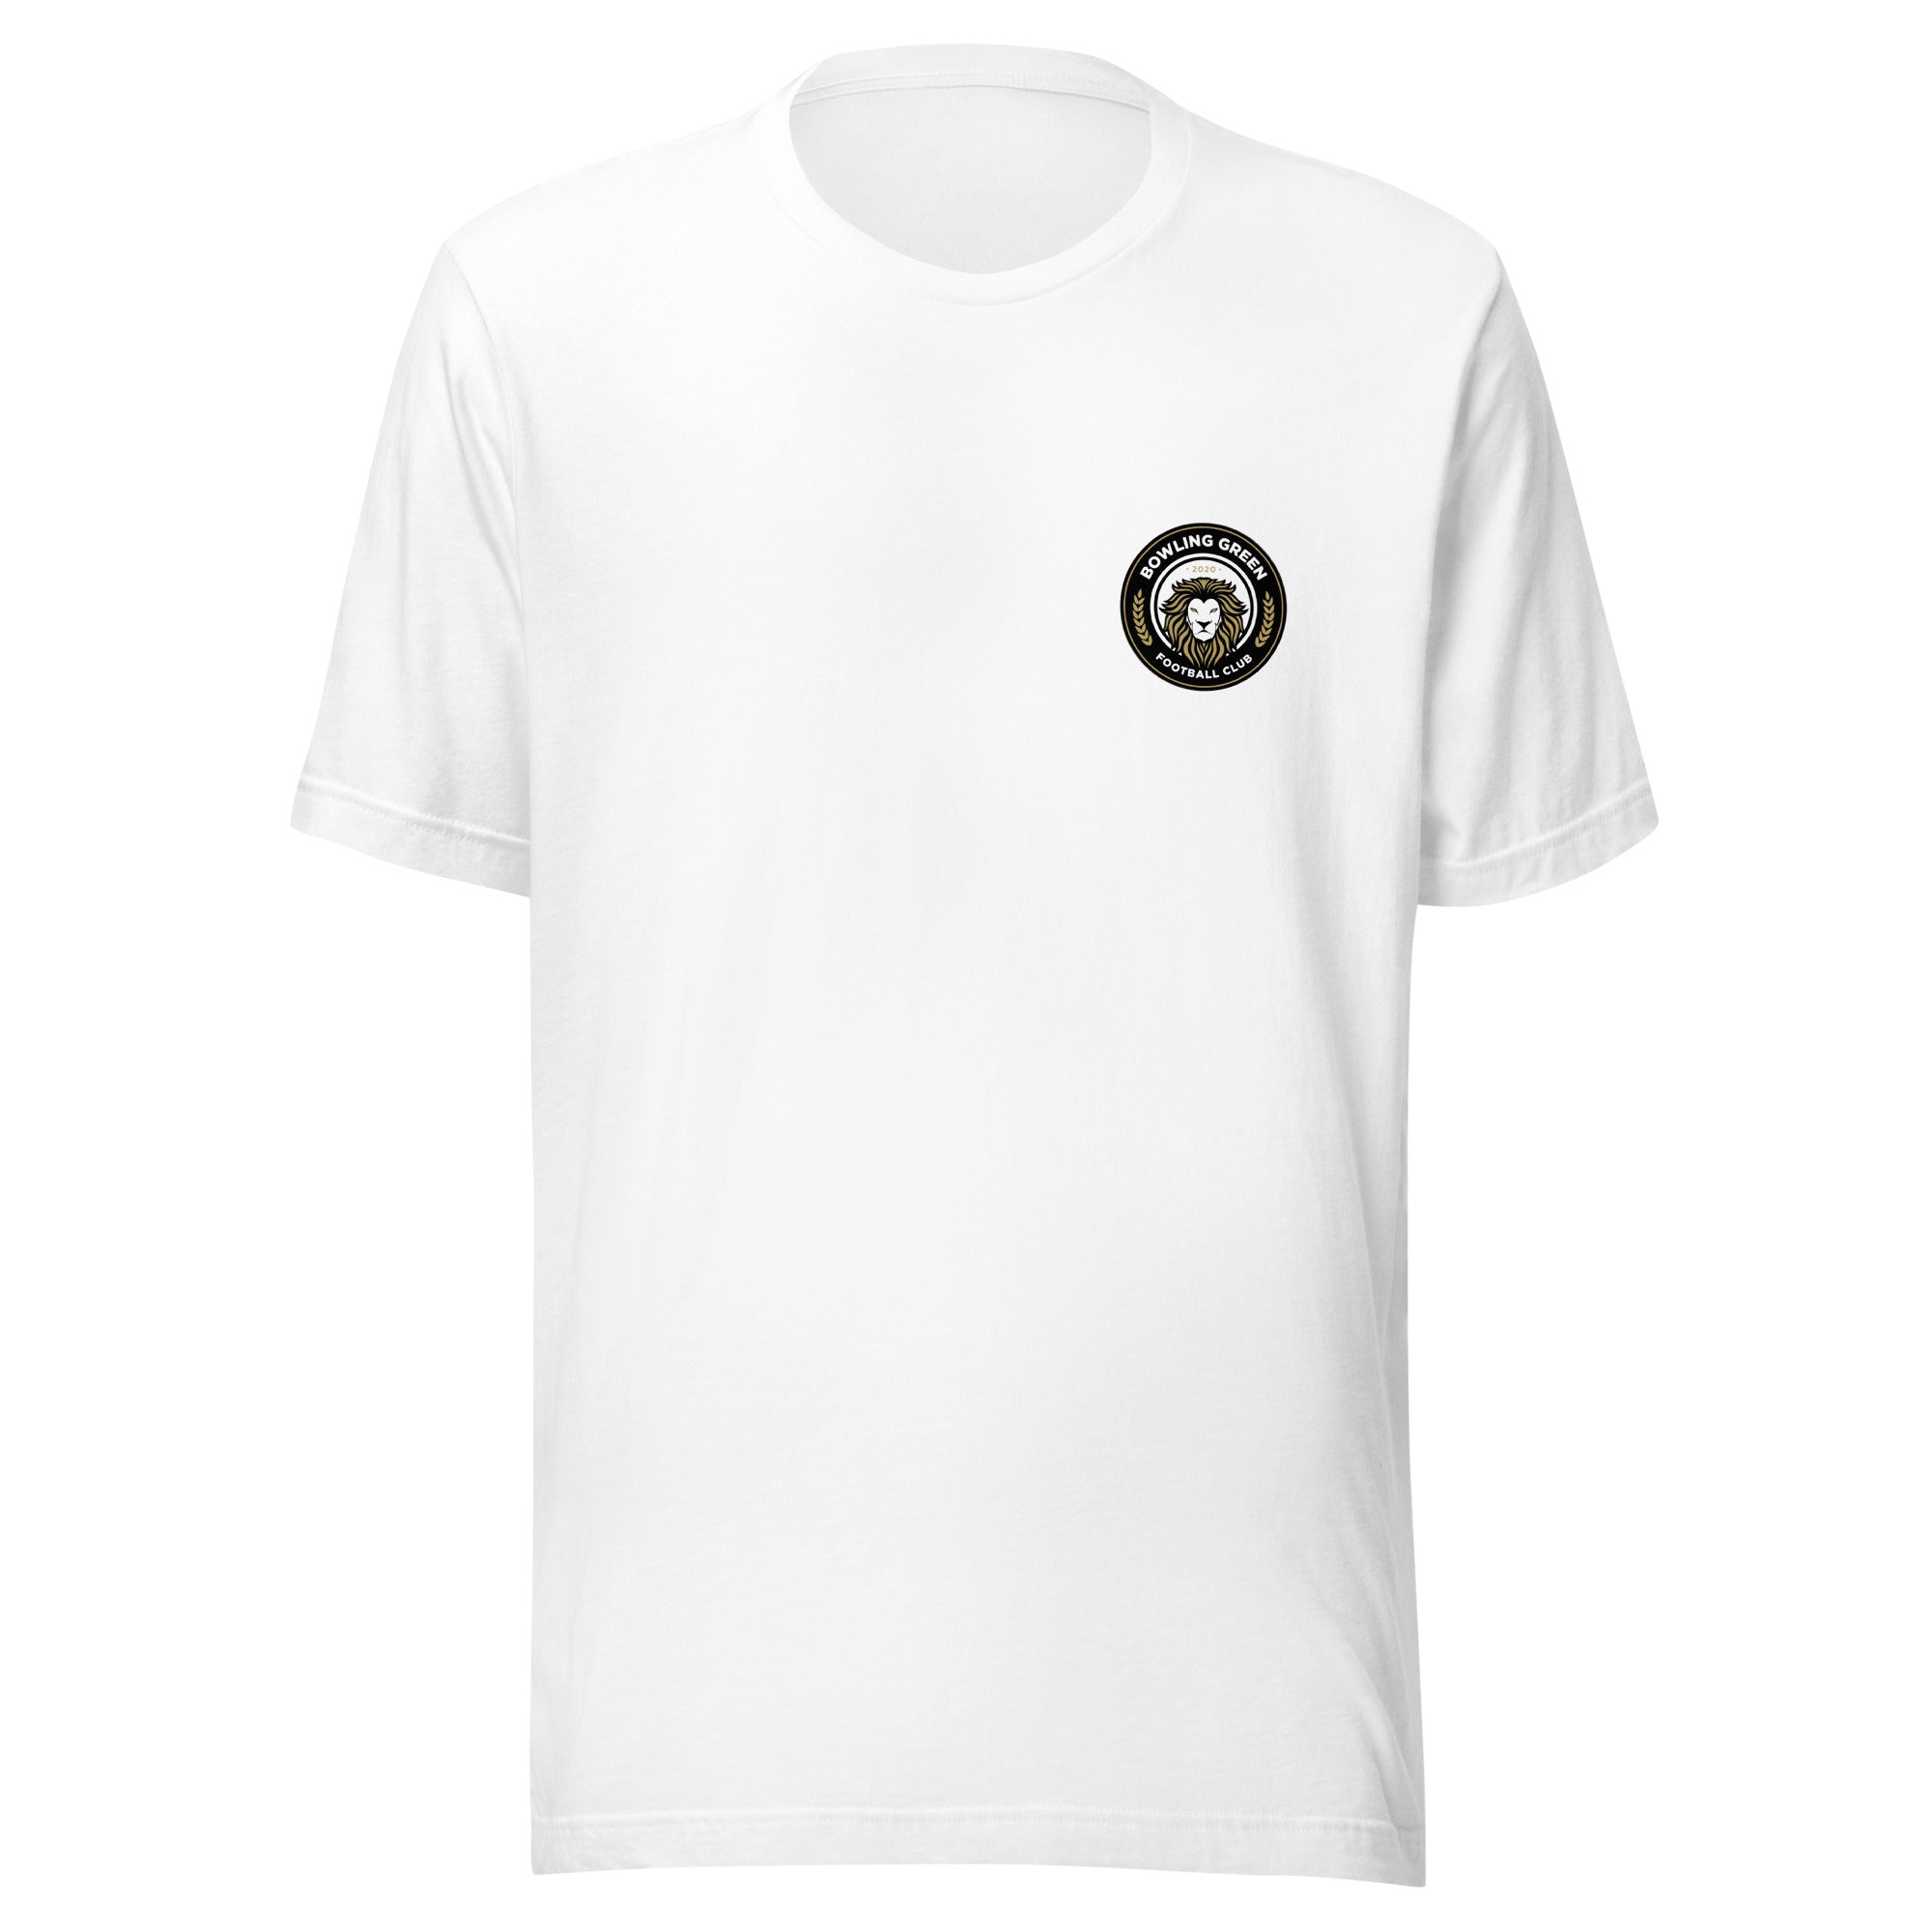 BGFC small logo t-shirt